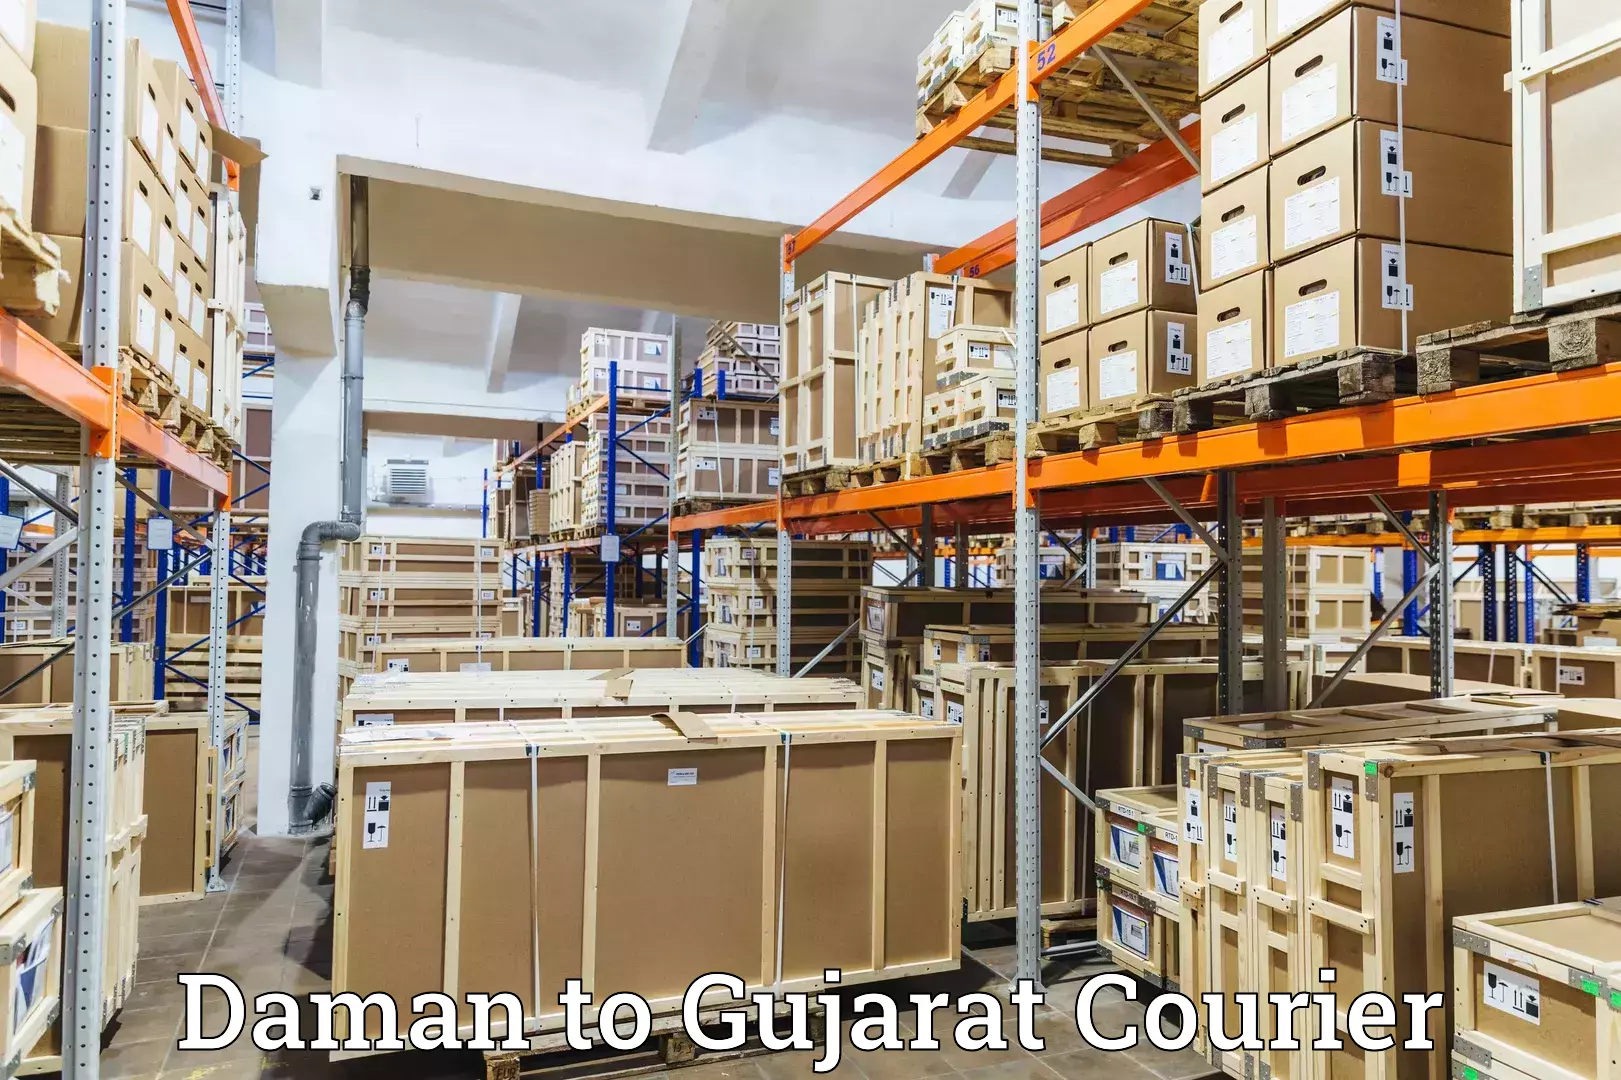 Global logistics network Daman to Gandhinagar